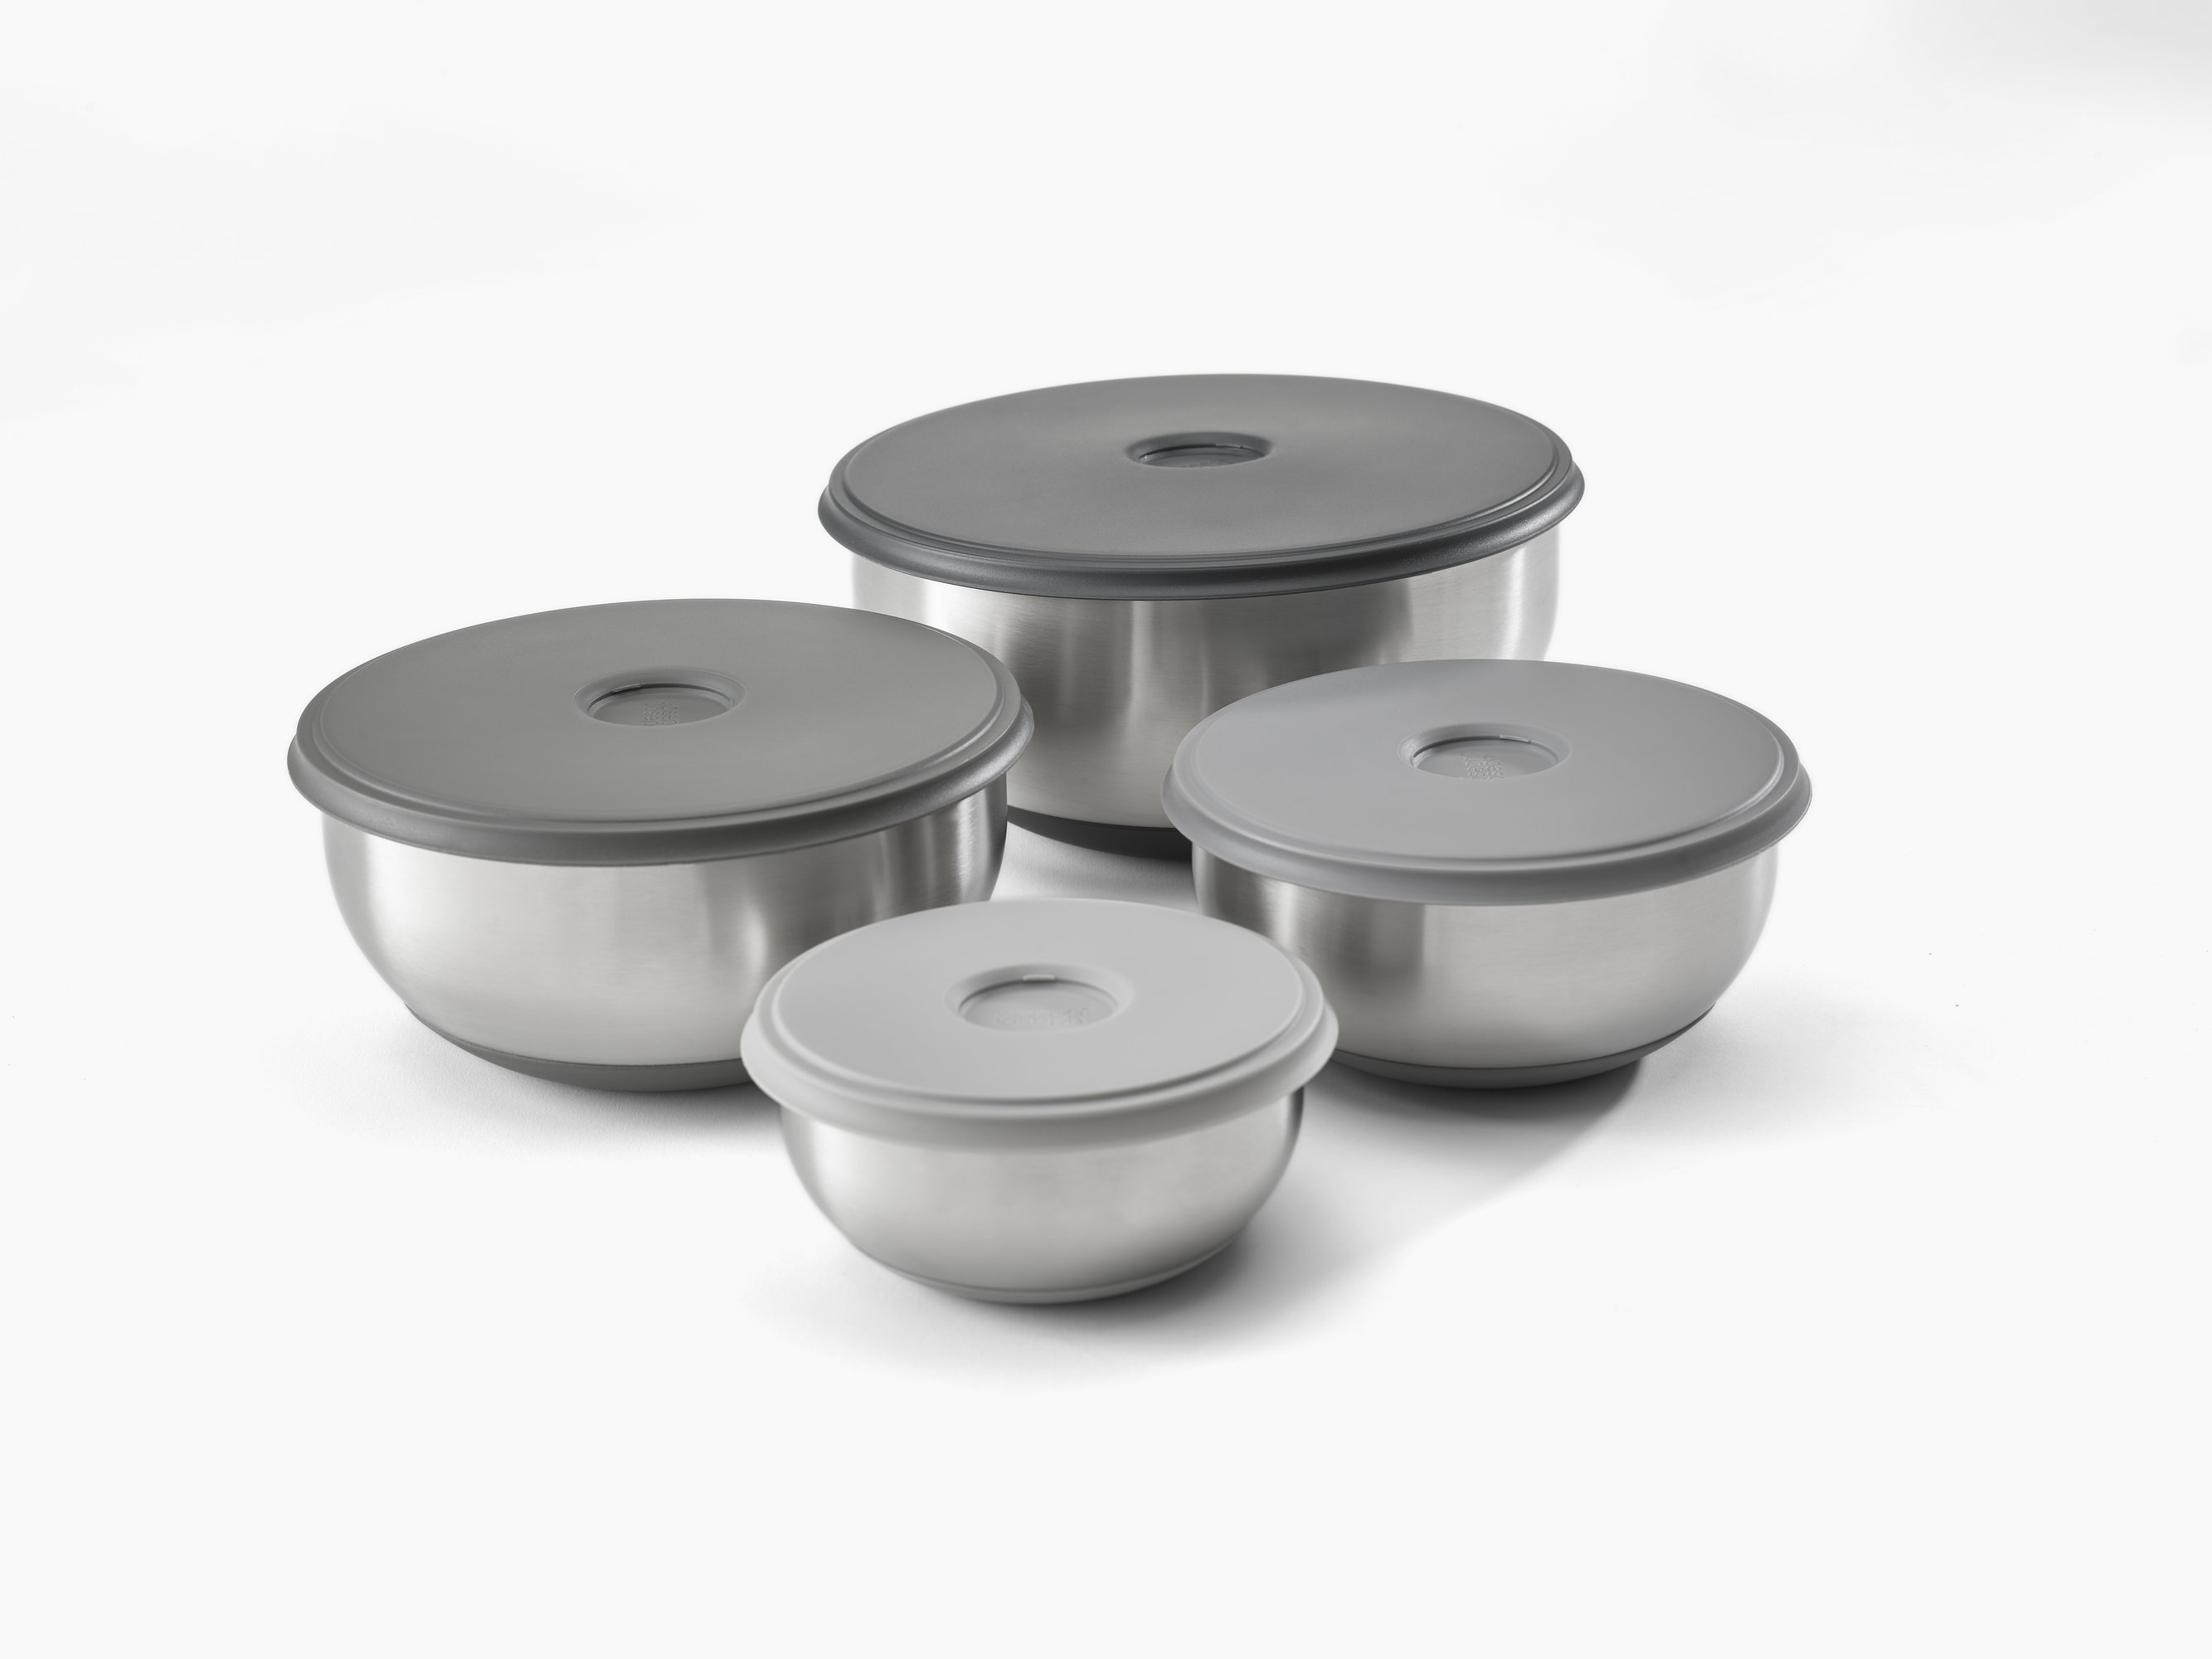 Sterilite 8 Piece Bowl And Lid Set Plastic Mixing Bowl With Spout